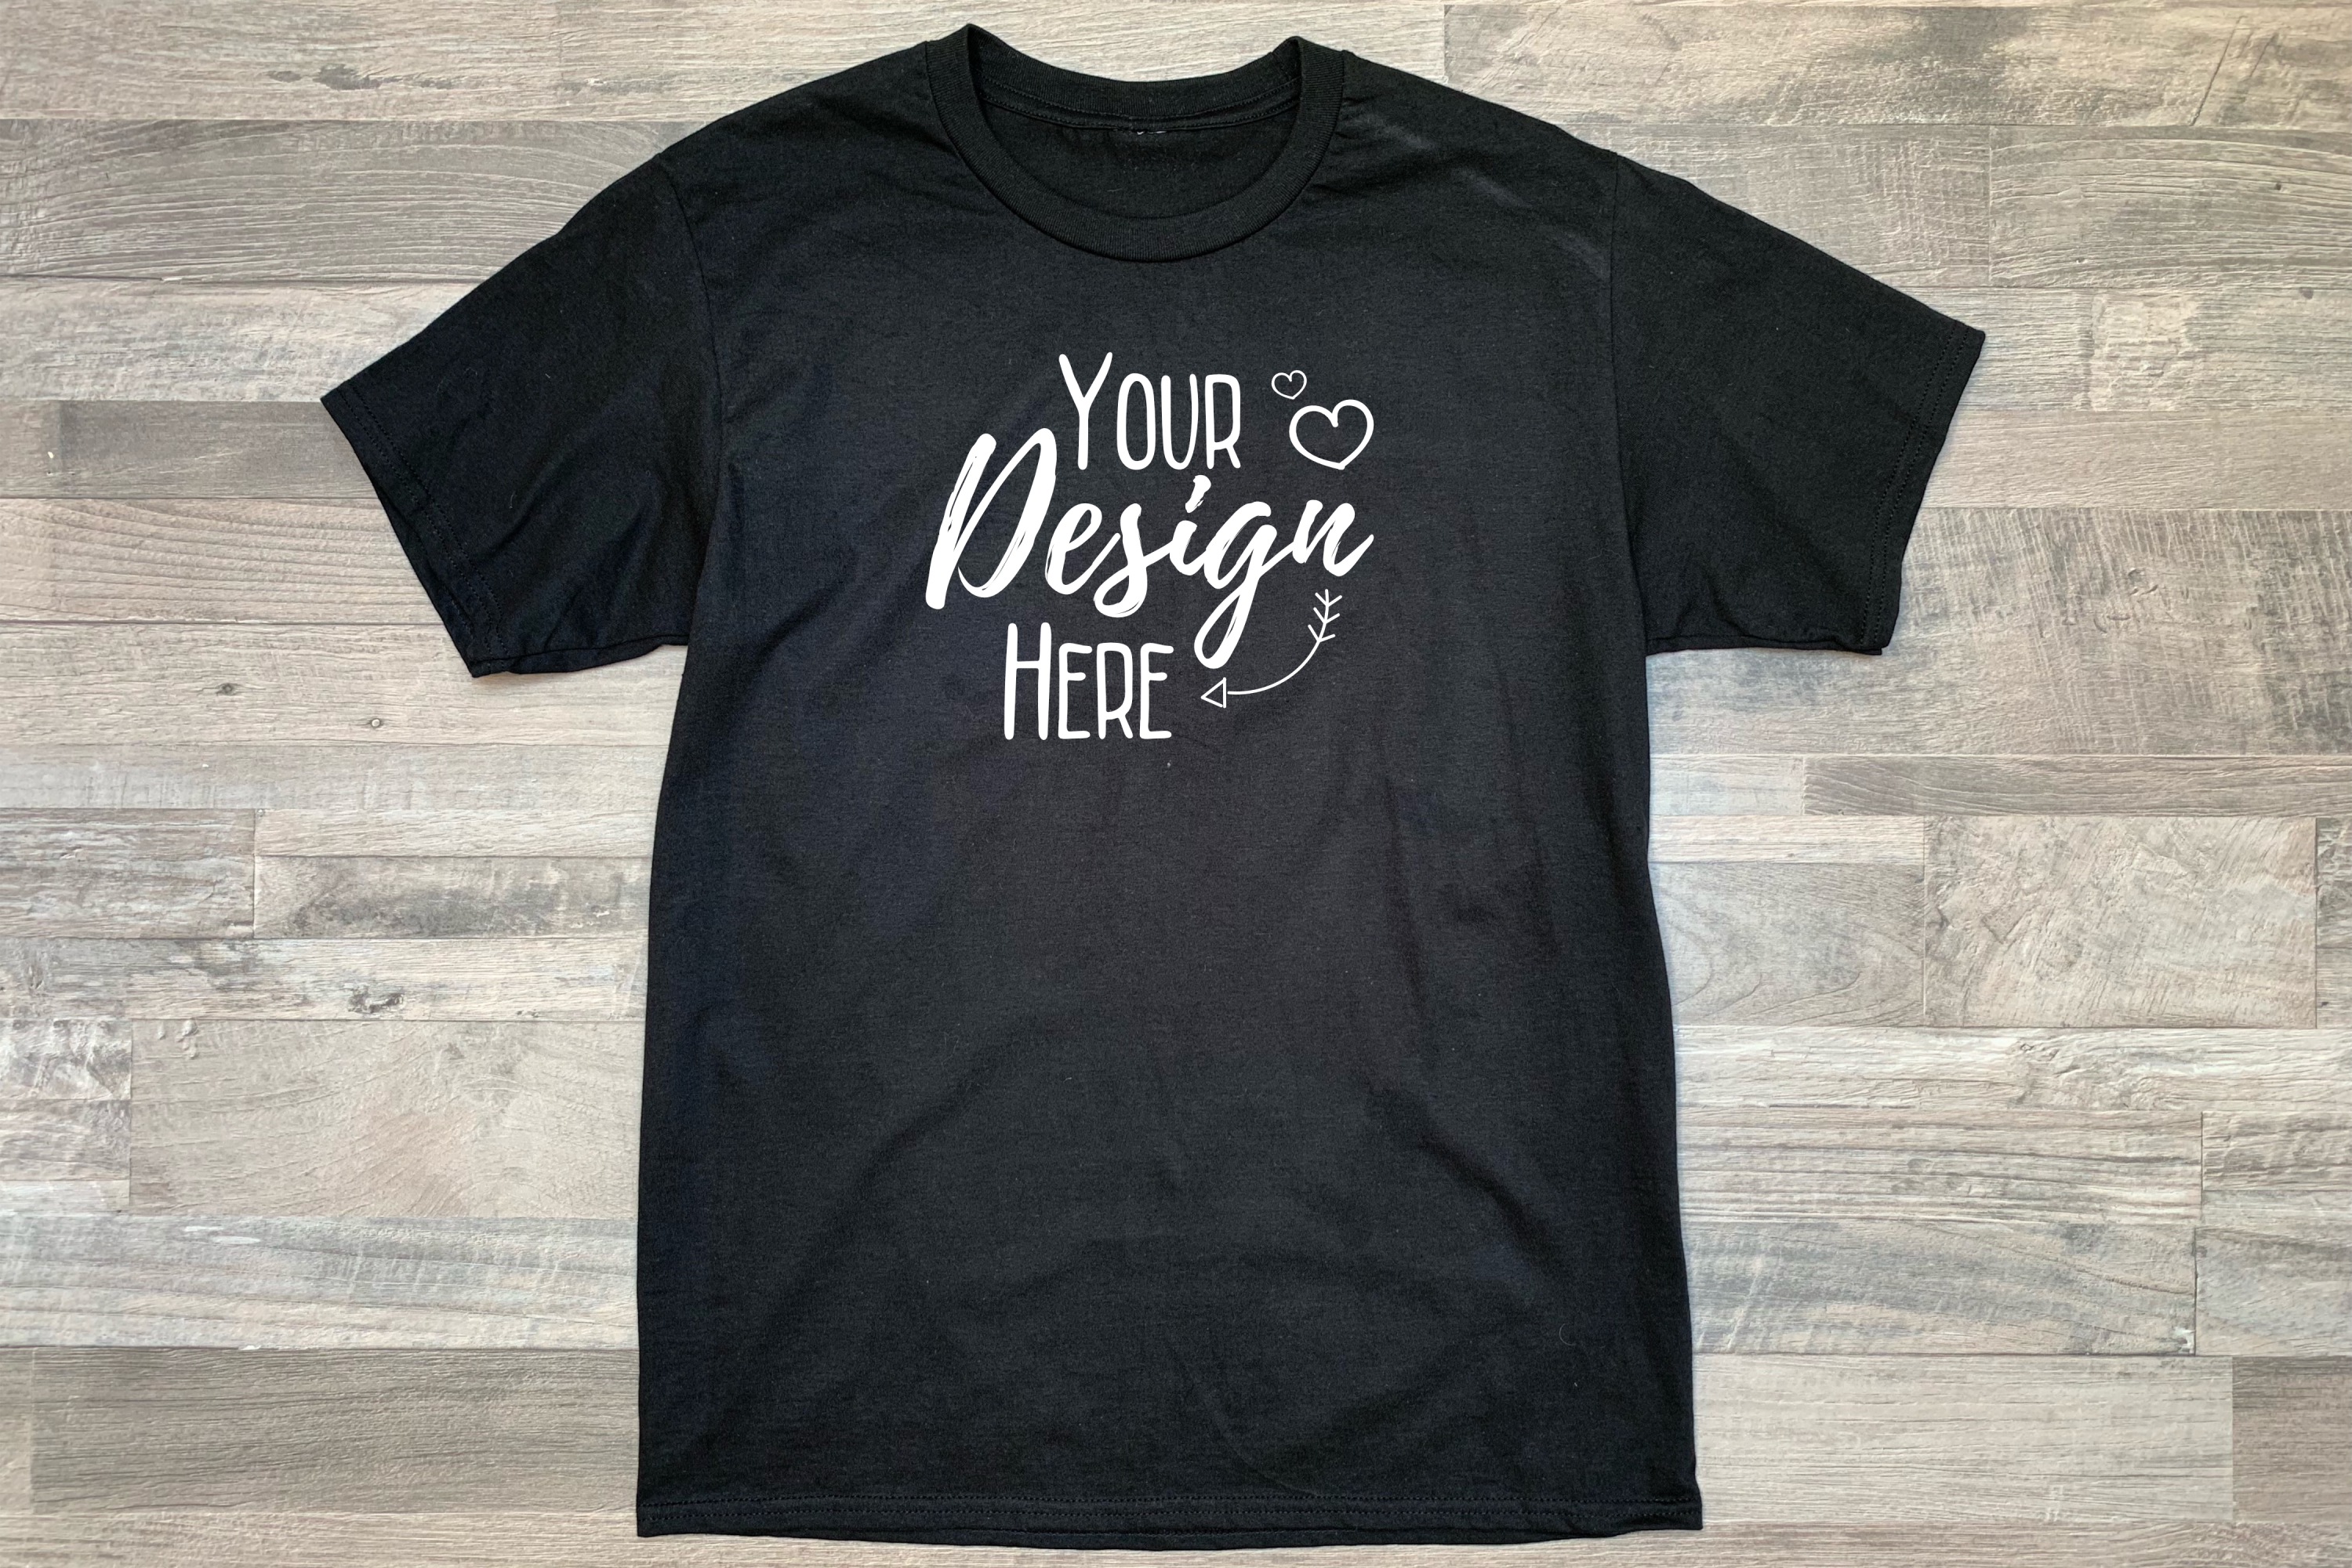 Plain Black T-Shirt Mockup / Flat Lay Design / Summer Design